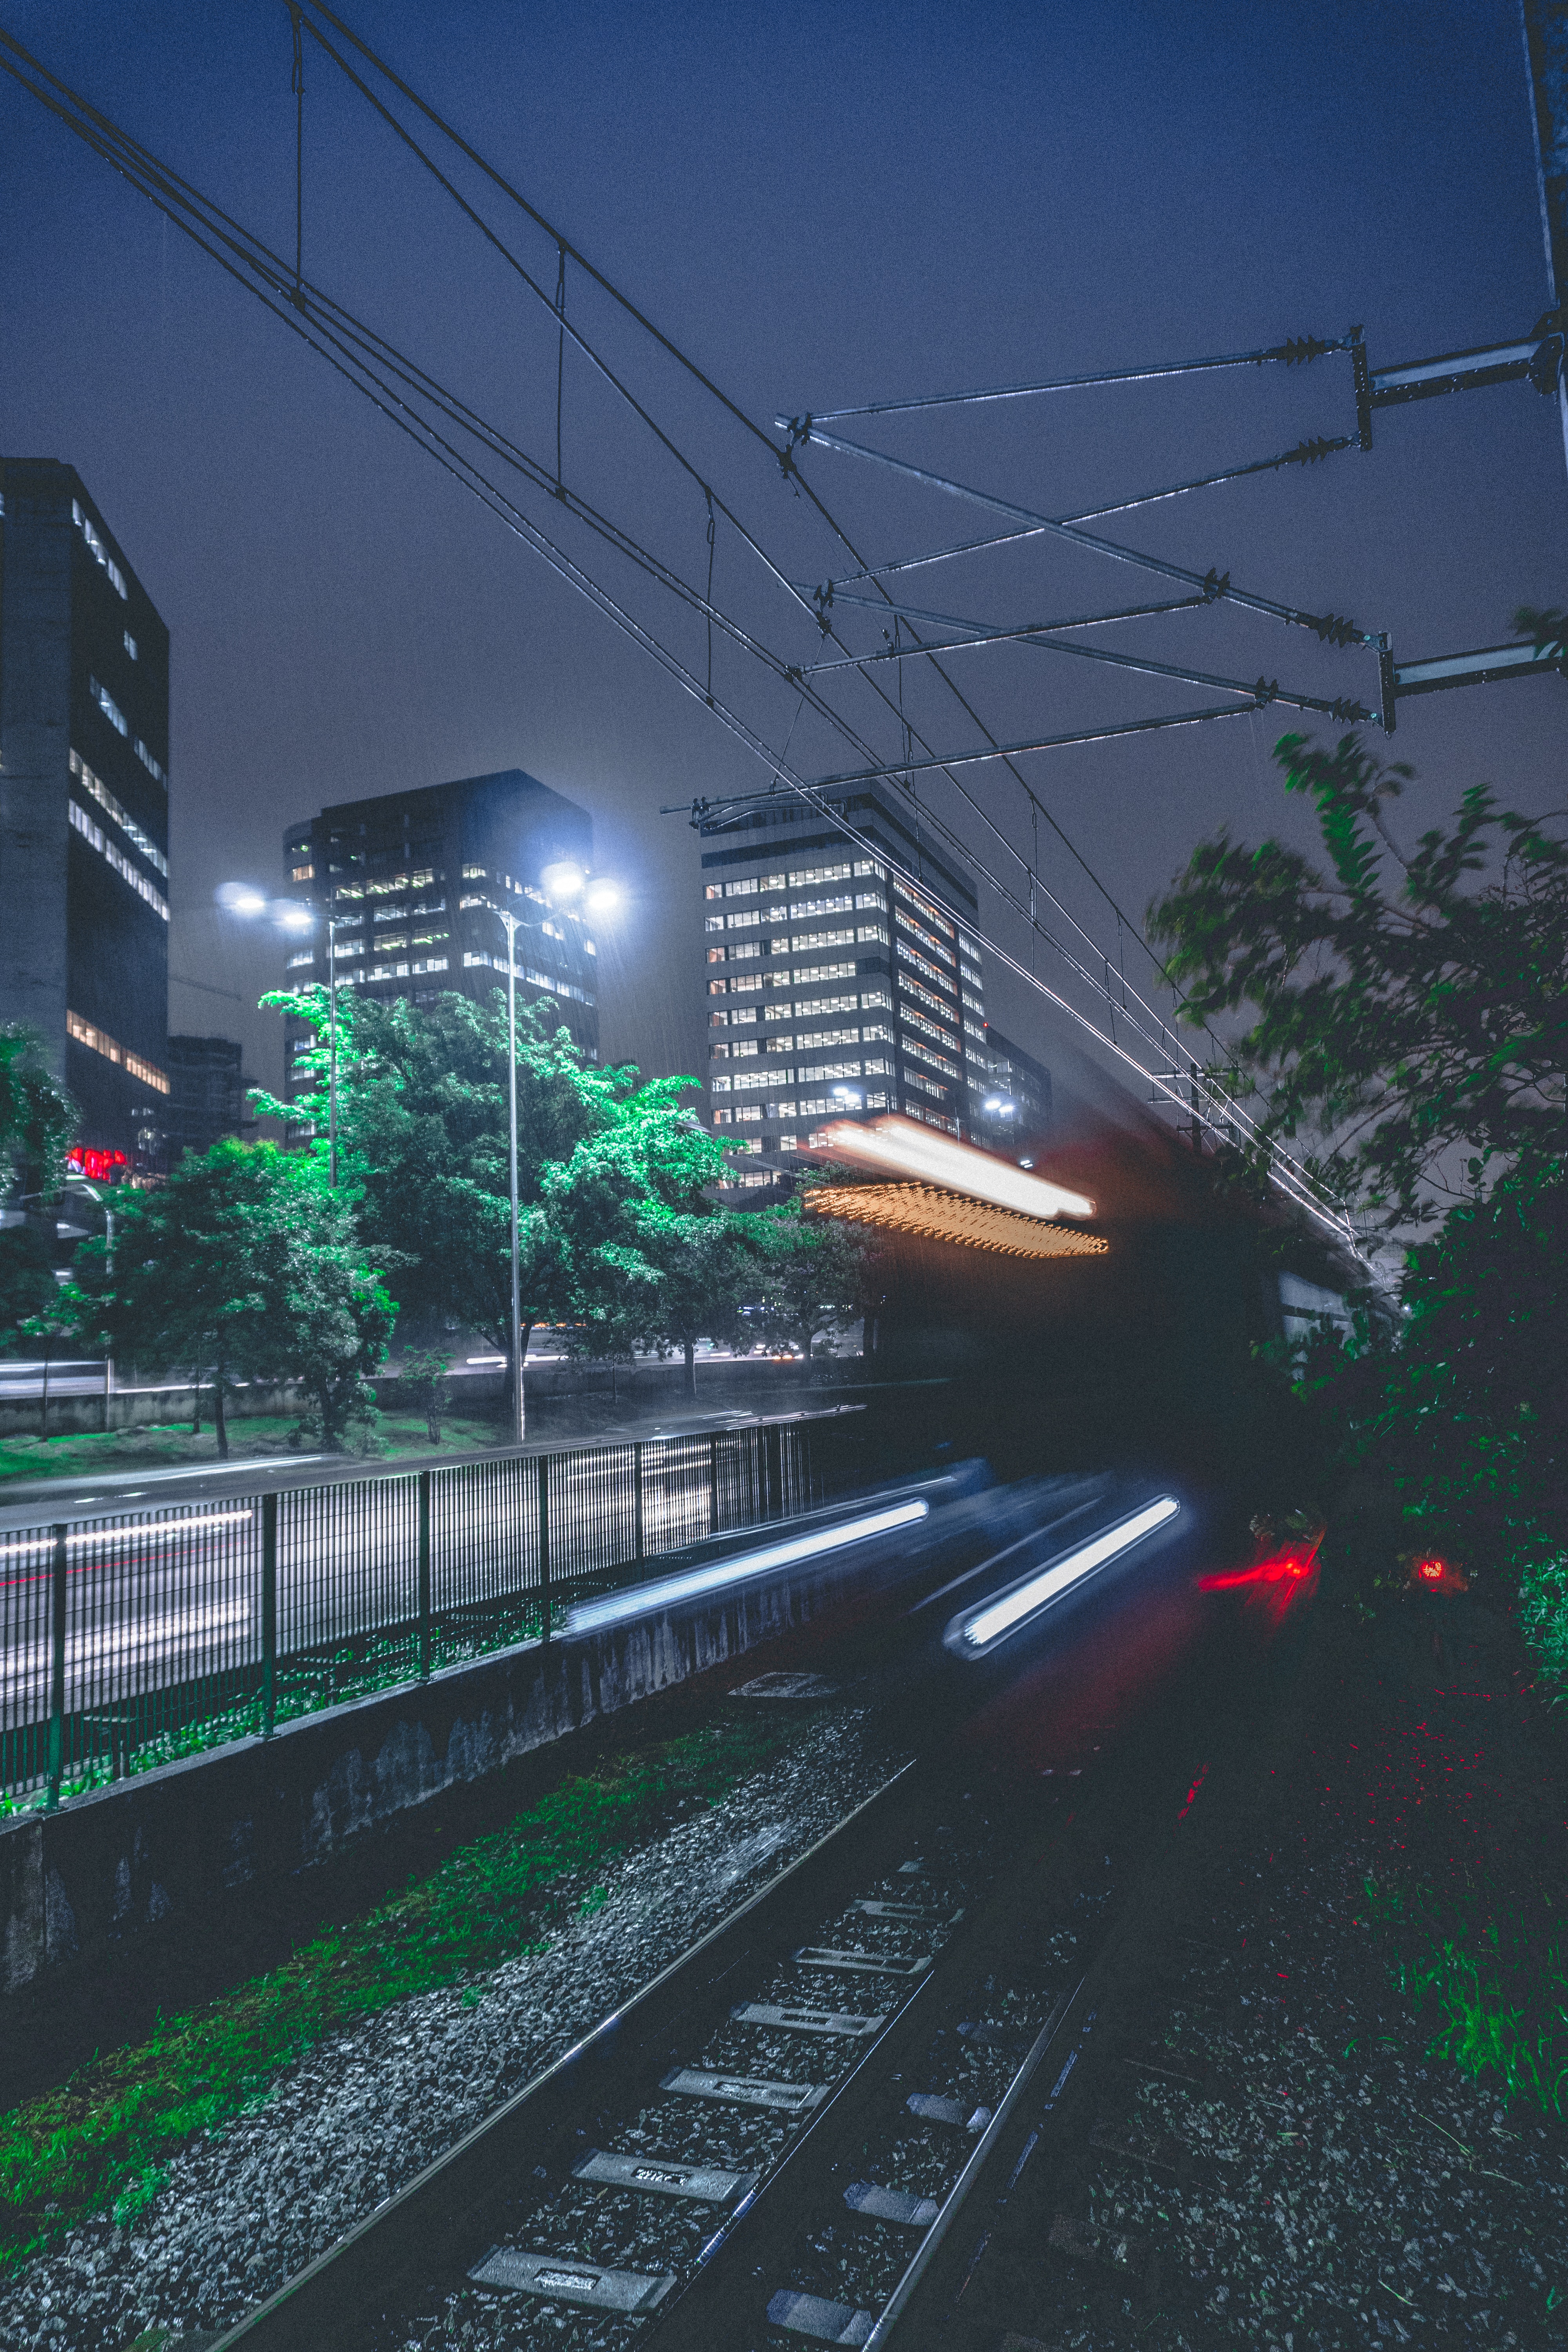 Light Trails on City Street at Night, Motion, Vehicles, Urban, Travel, HQ Photo